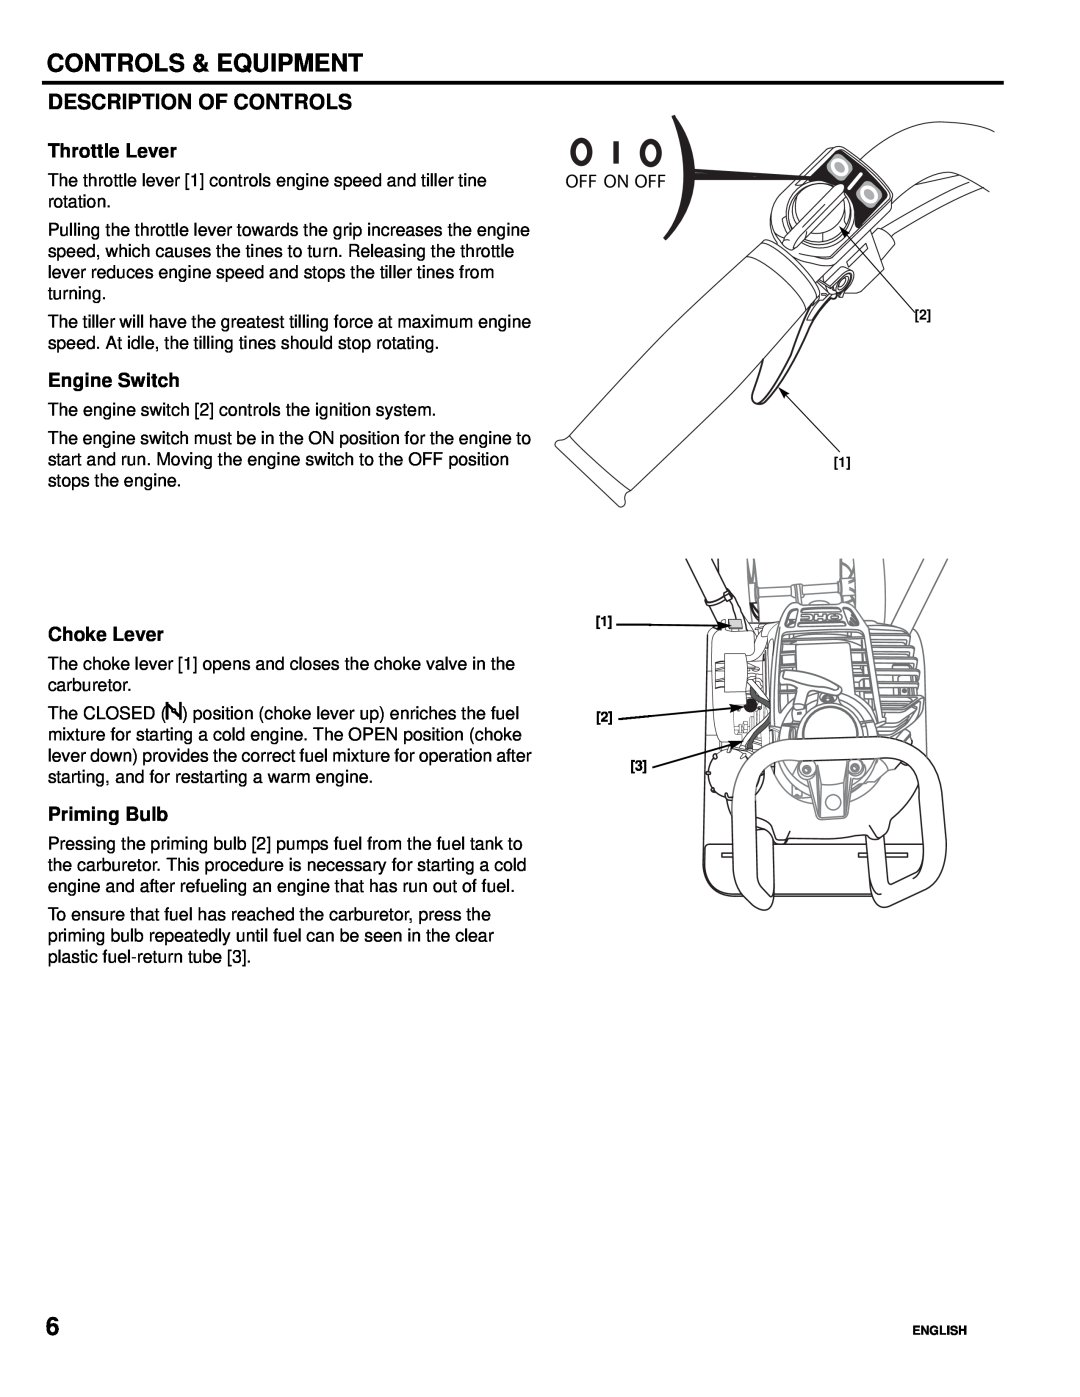 Honda Power Equipment FG110 Controls & Equipment, Description Of Controls, Throttle Lever, Engine Switch, Choke Lever 